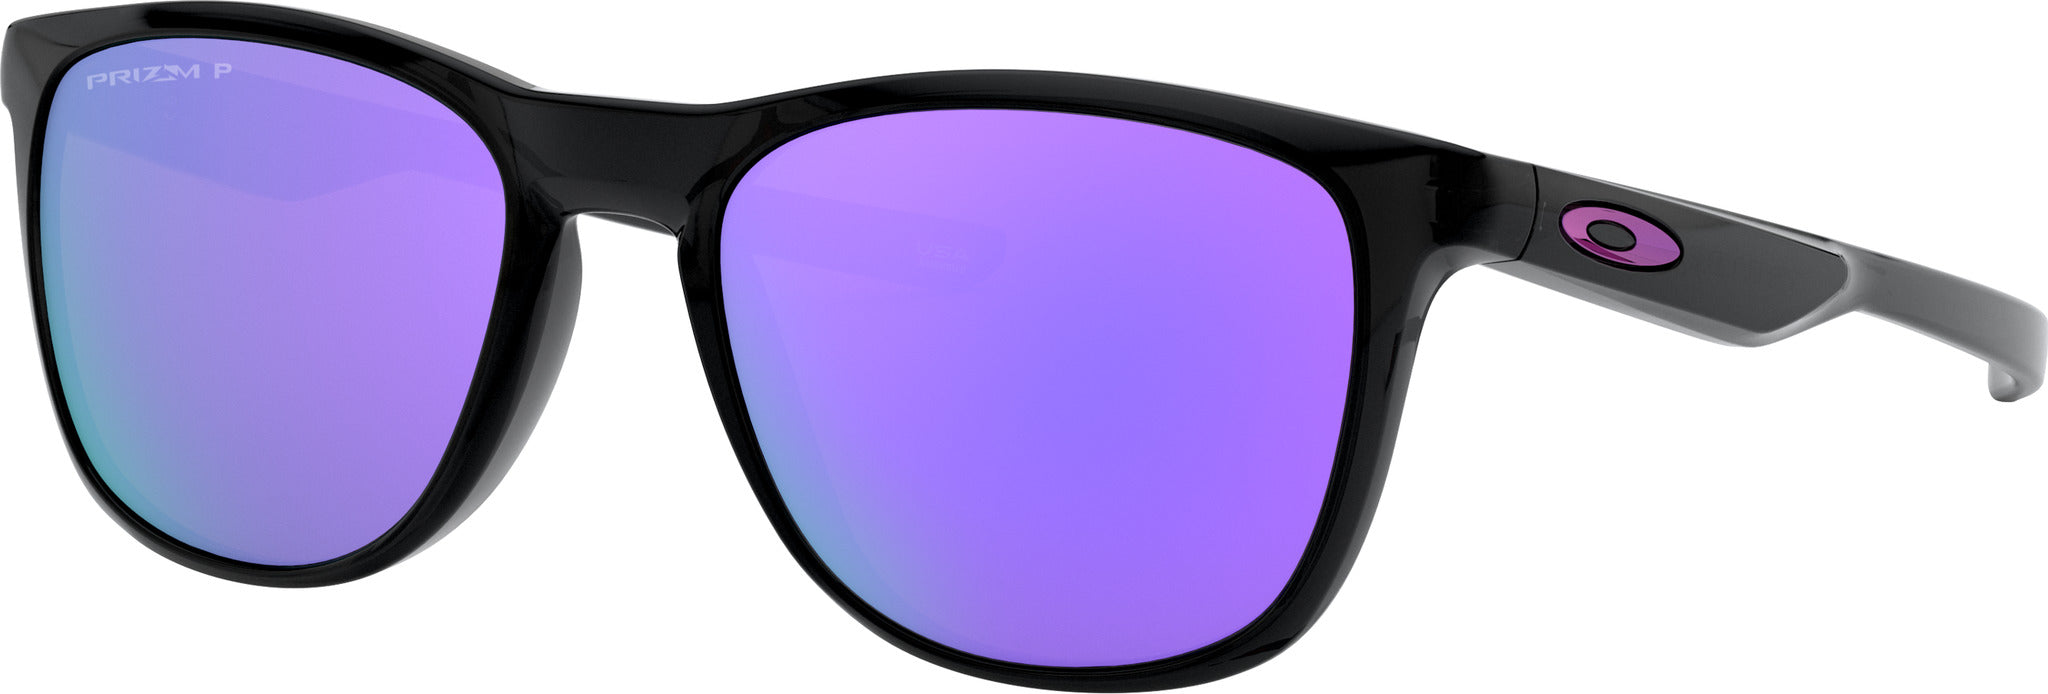 violet iridium oakley